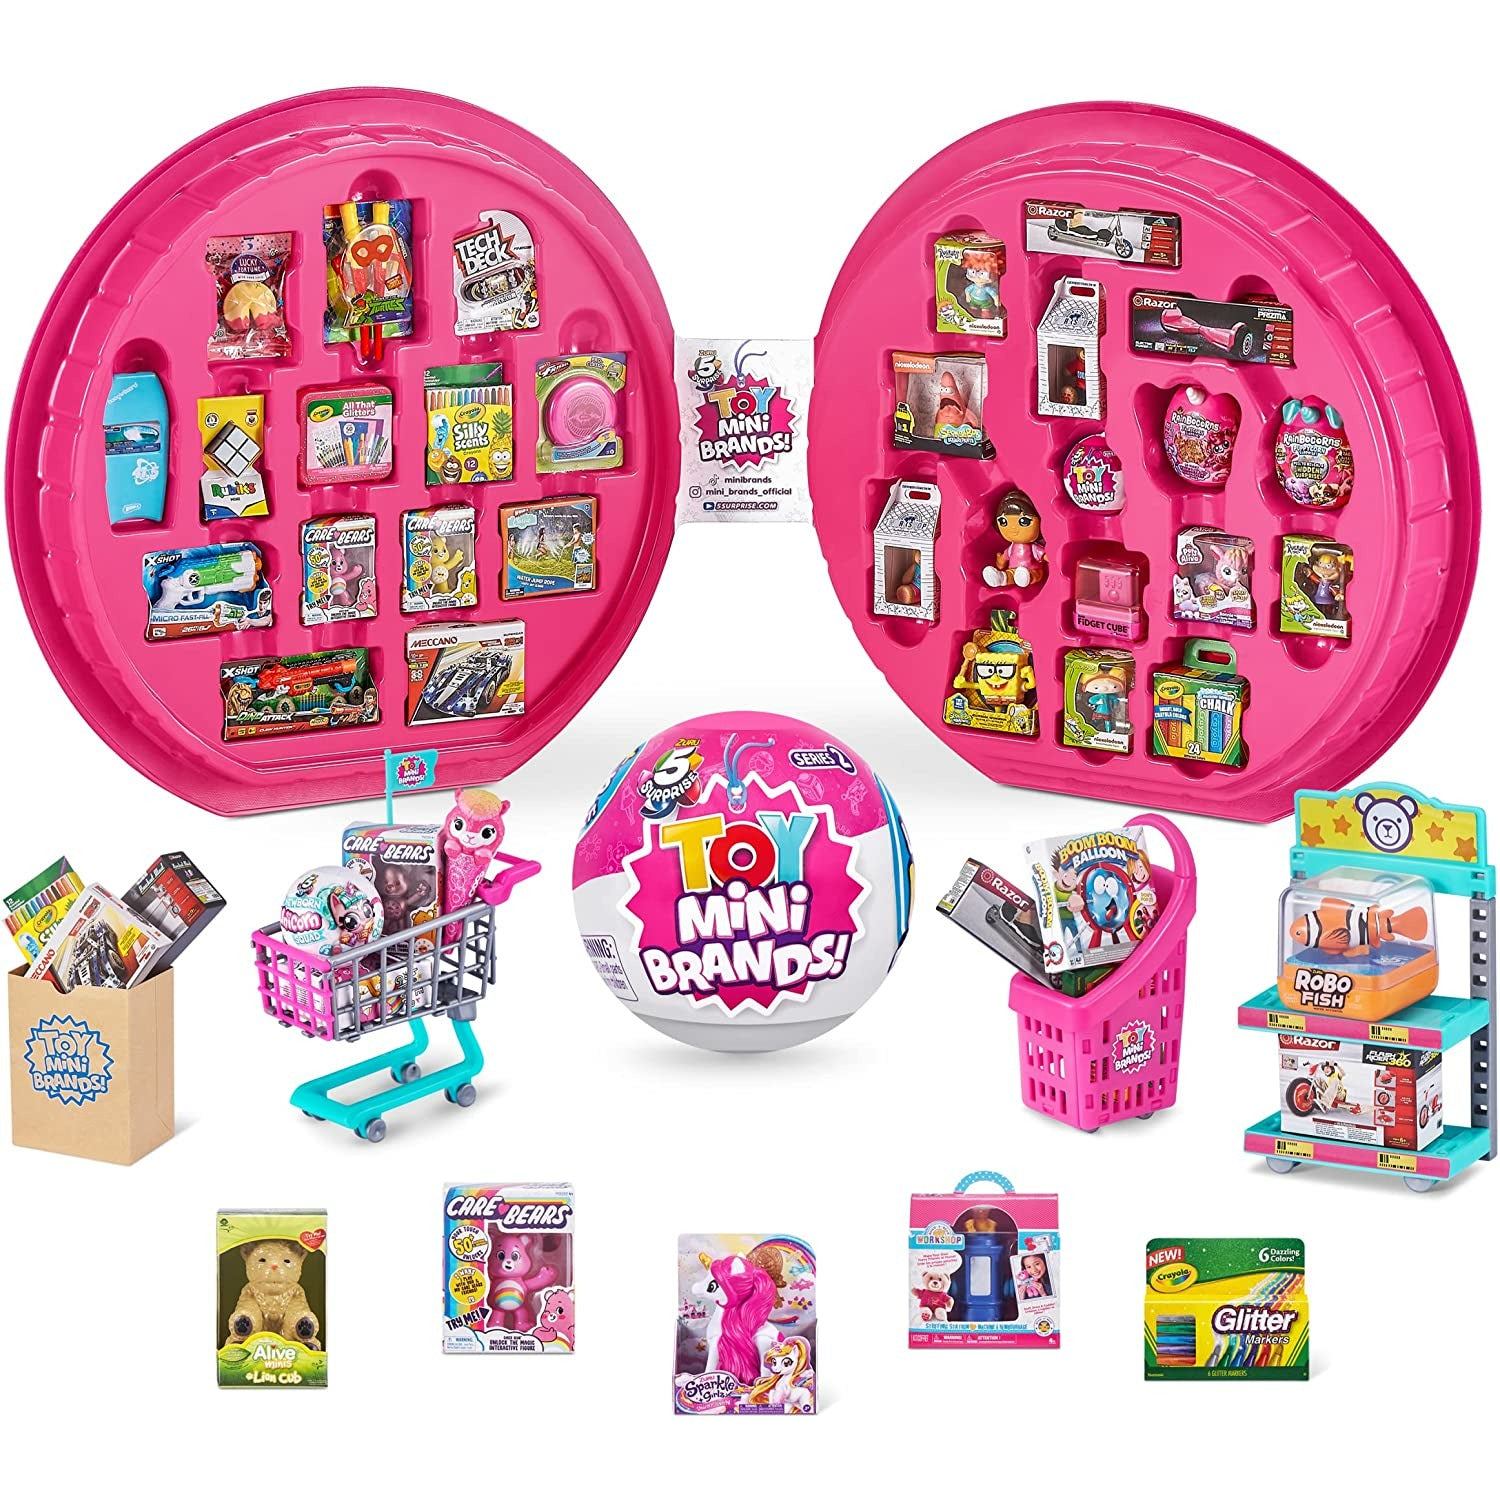 Zuru 5 Surprise Toy Mini Brands Collector's Case with Minis, 5 pc - Kroger